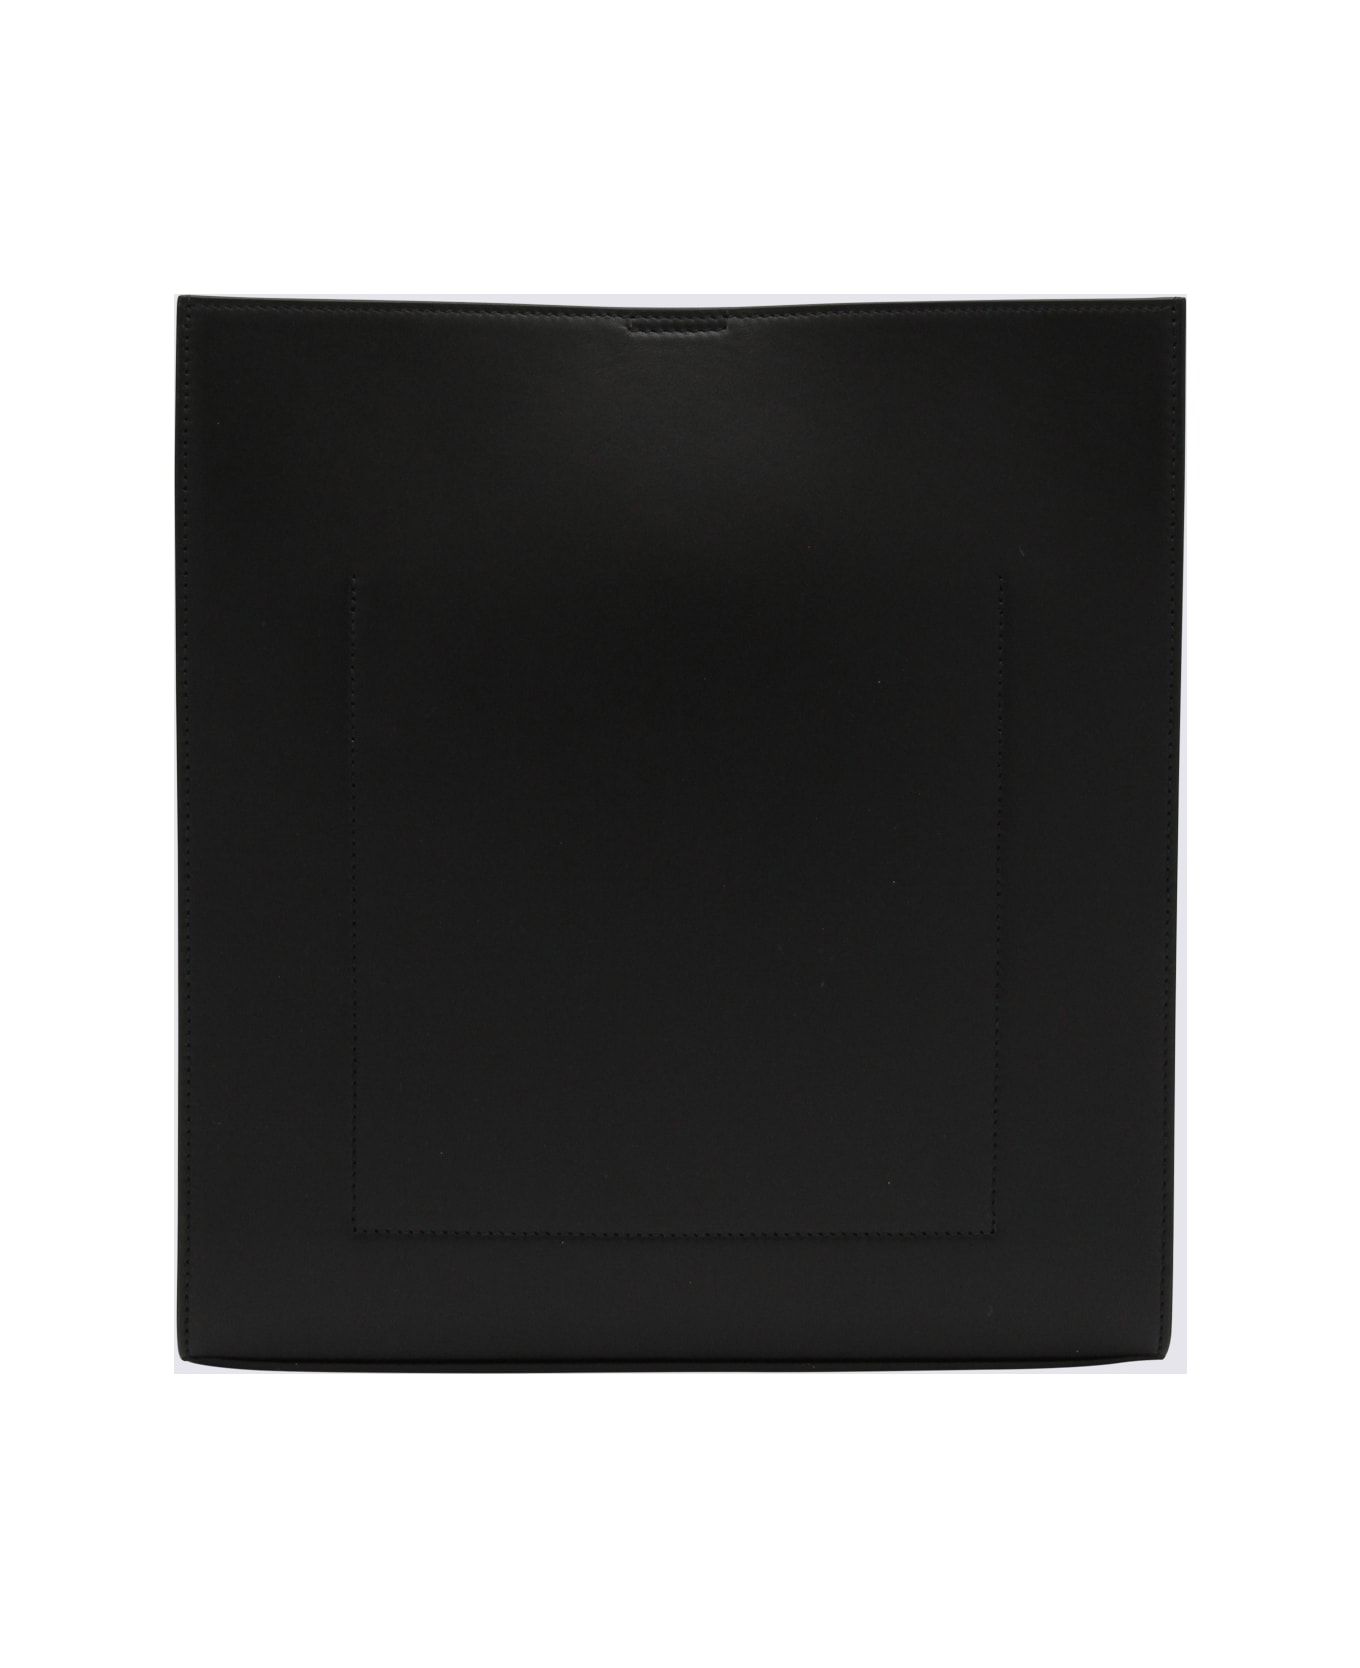 Jil Sander Black Leather Tangle Medium Crossbody Bag - Black ショルダーバッグ